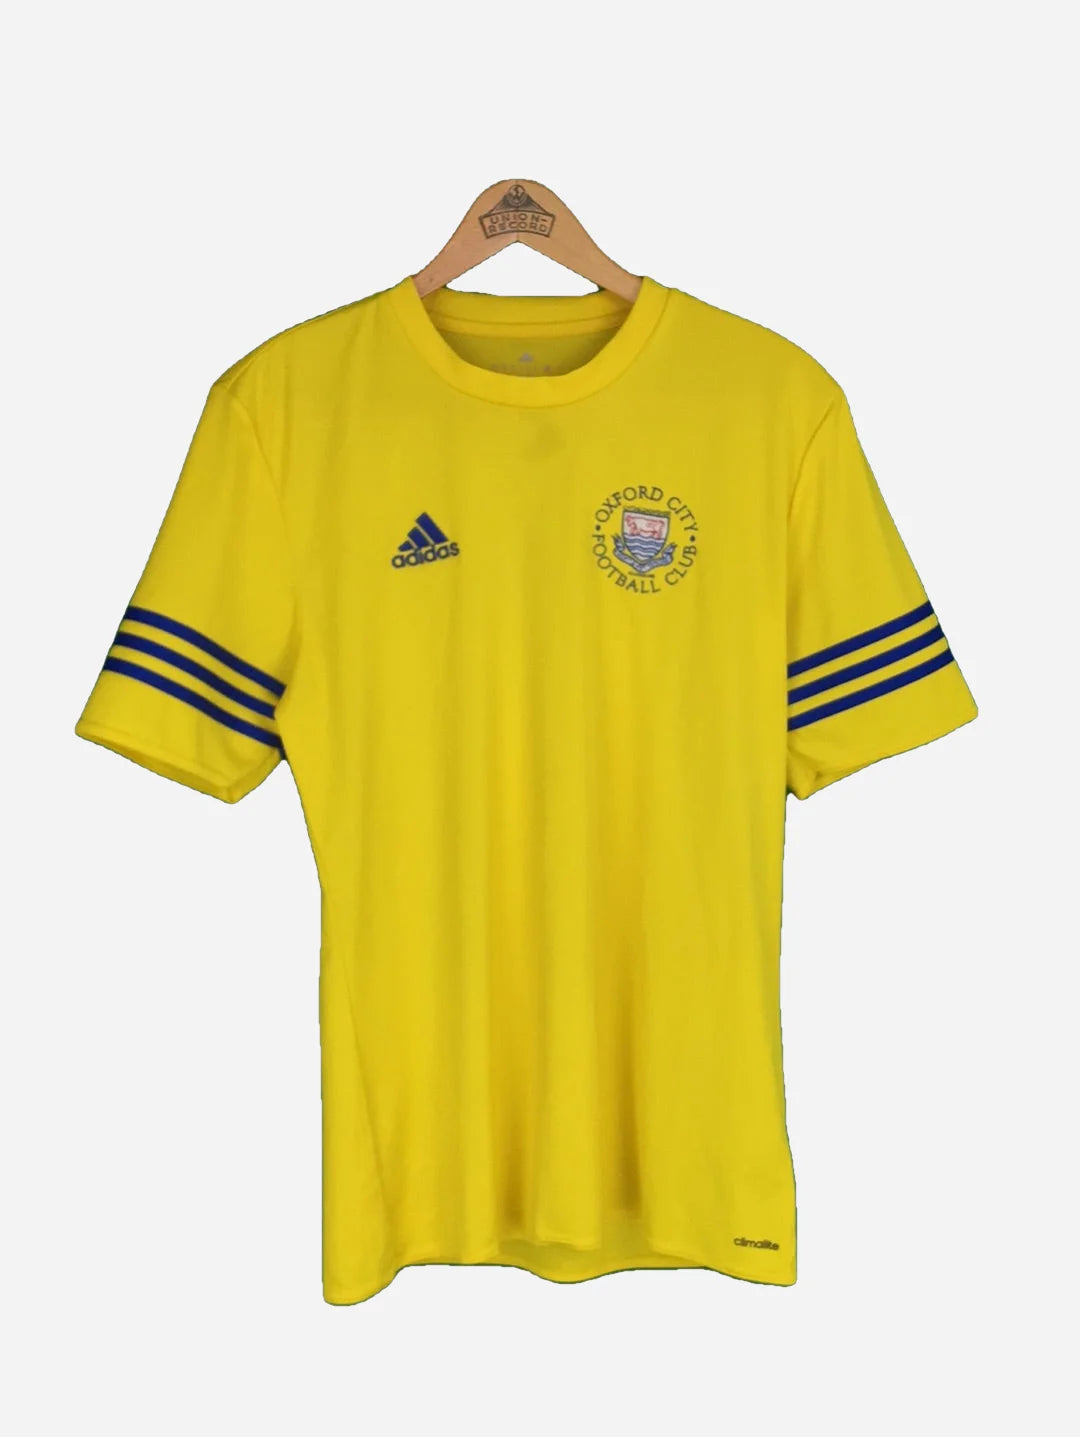 Adidas Oxford City jersey (L)